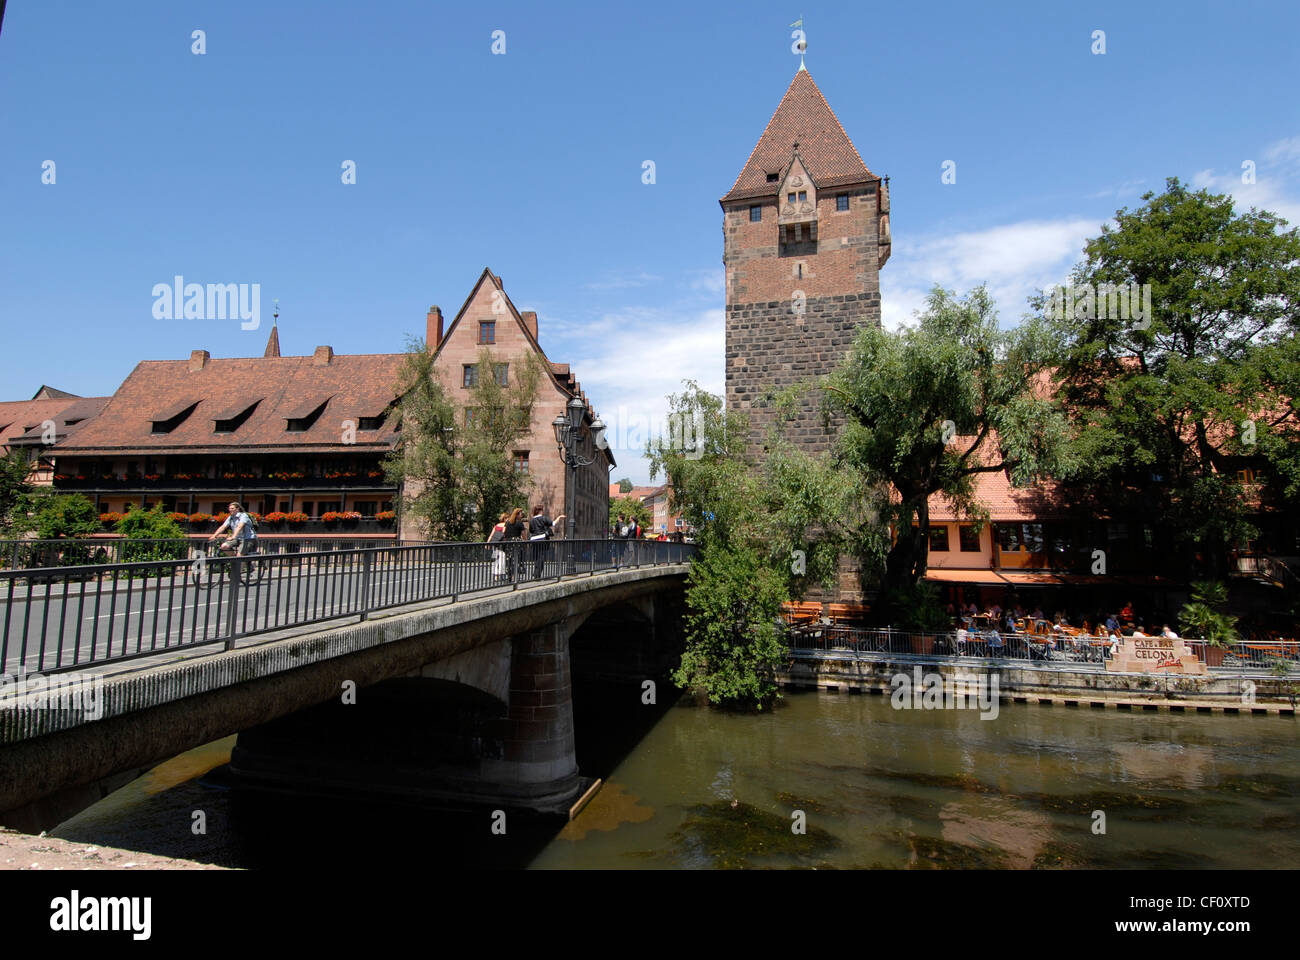 The Heubrucke (Heu bridge) and the Male Debotrs tower (debtors prison) over the river Pegnitz in Nuremberg, Germany Stock Photo